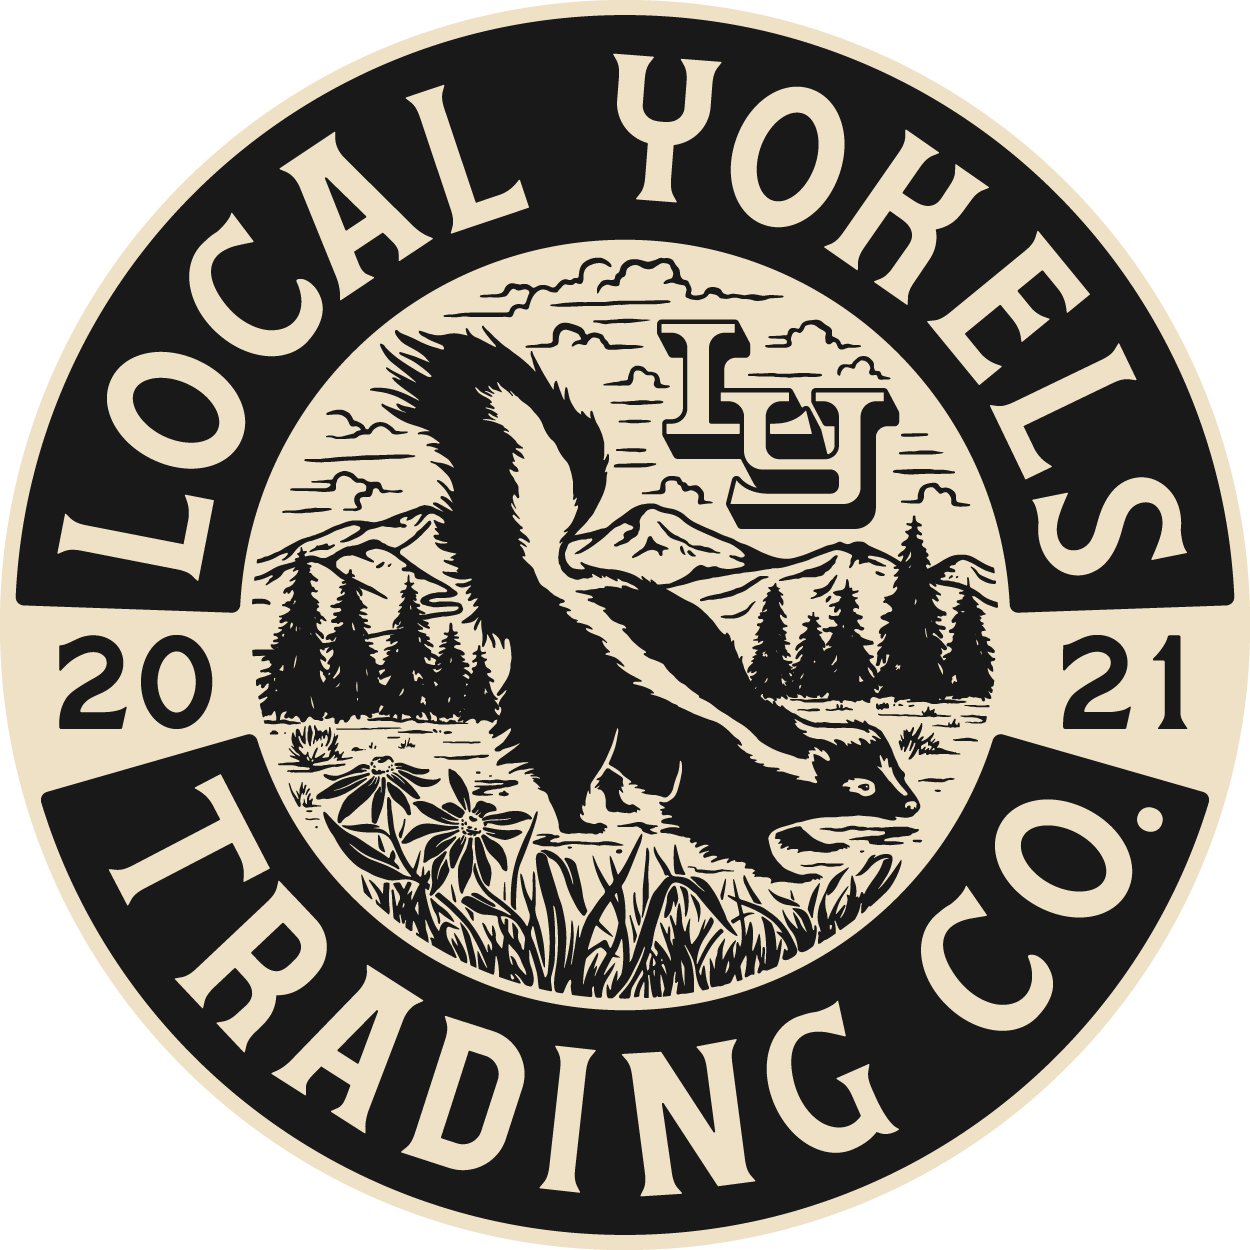 Local Yokels Trading Co.